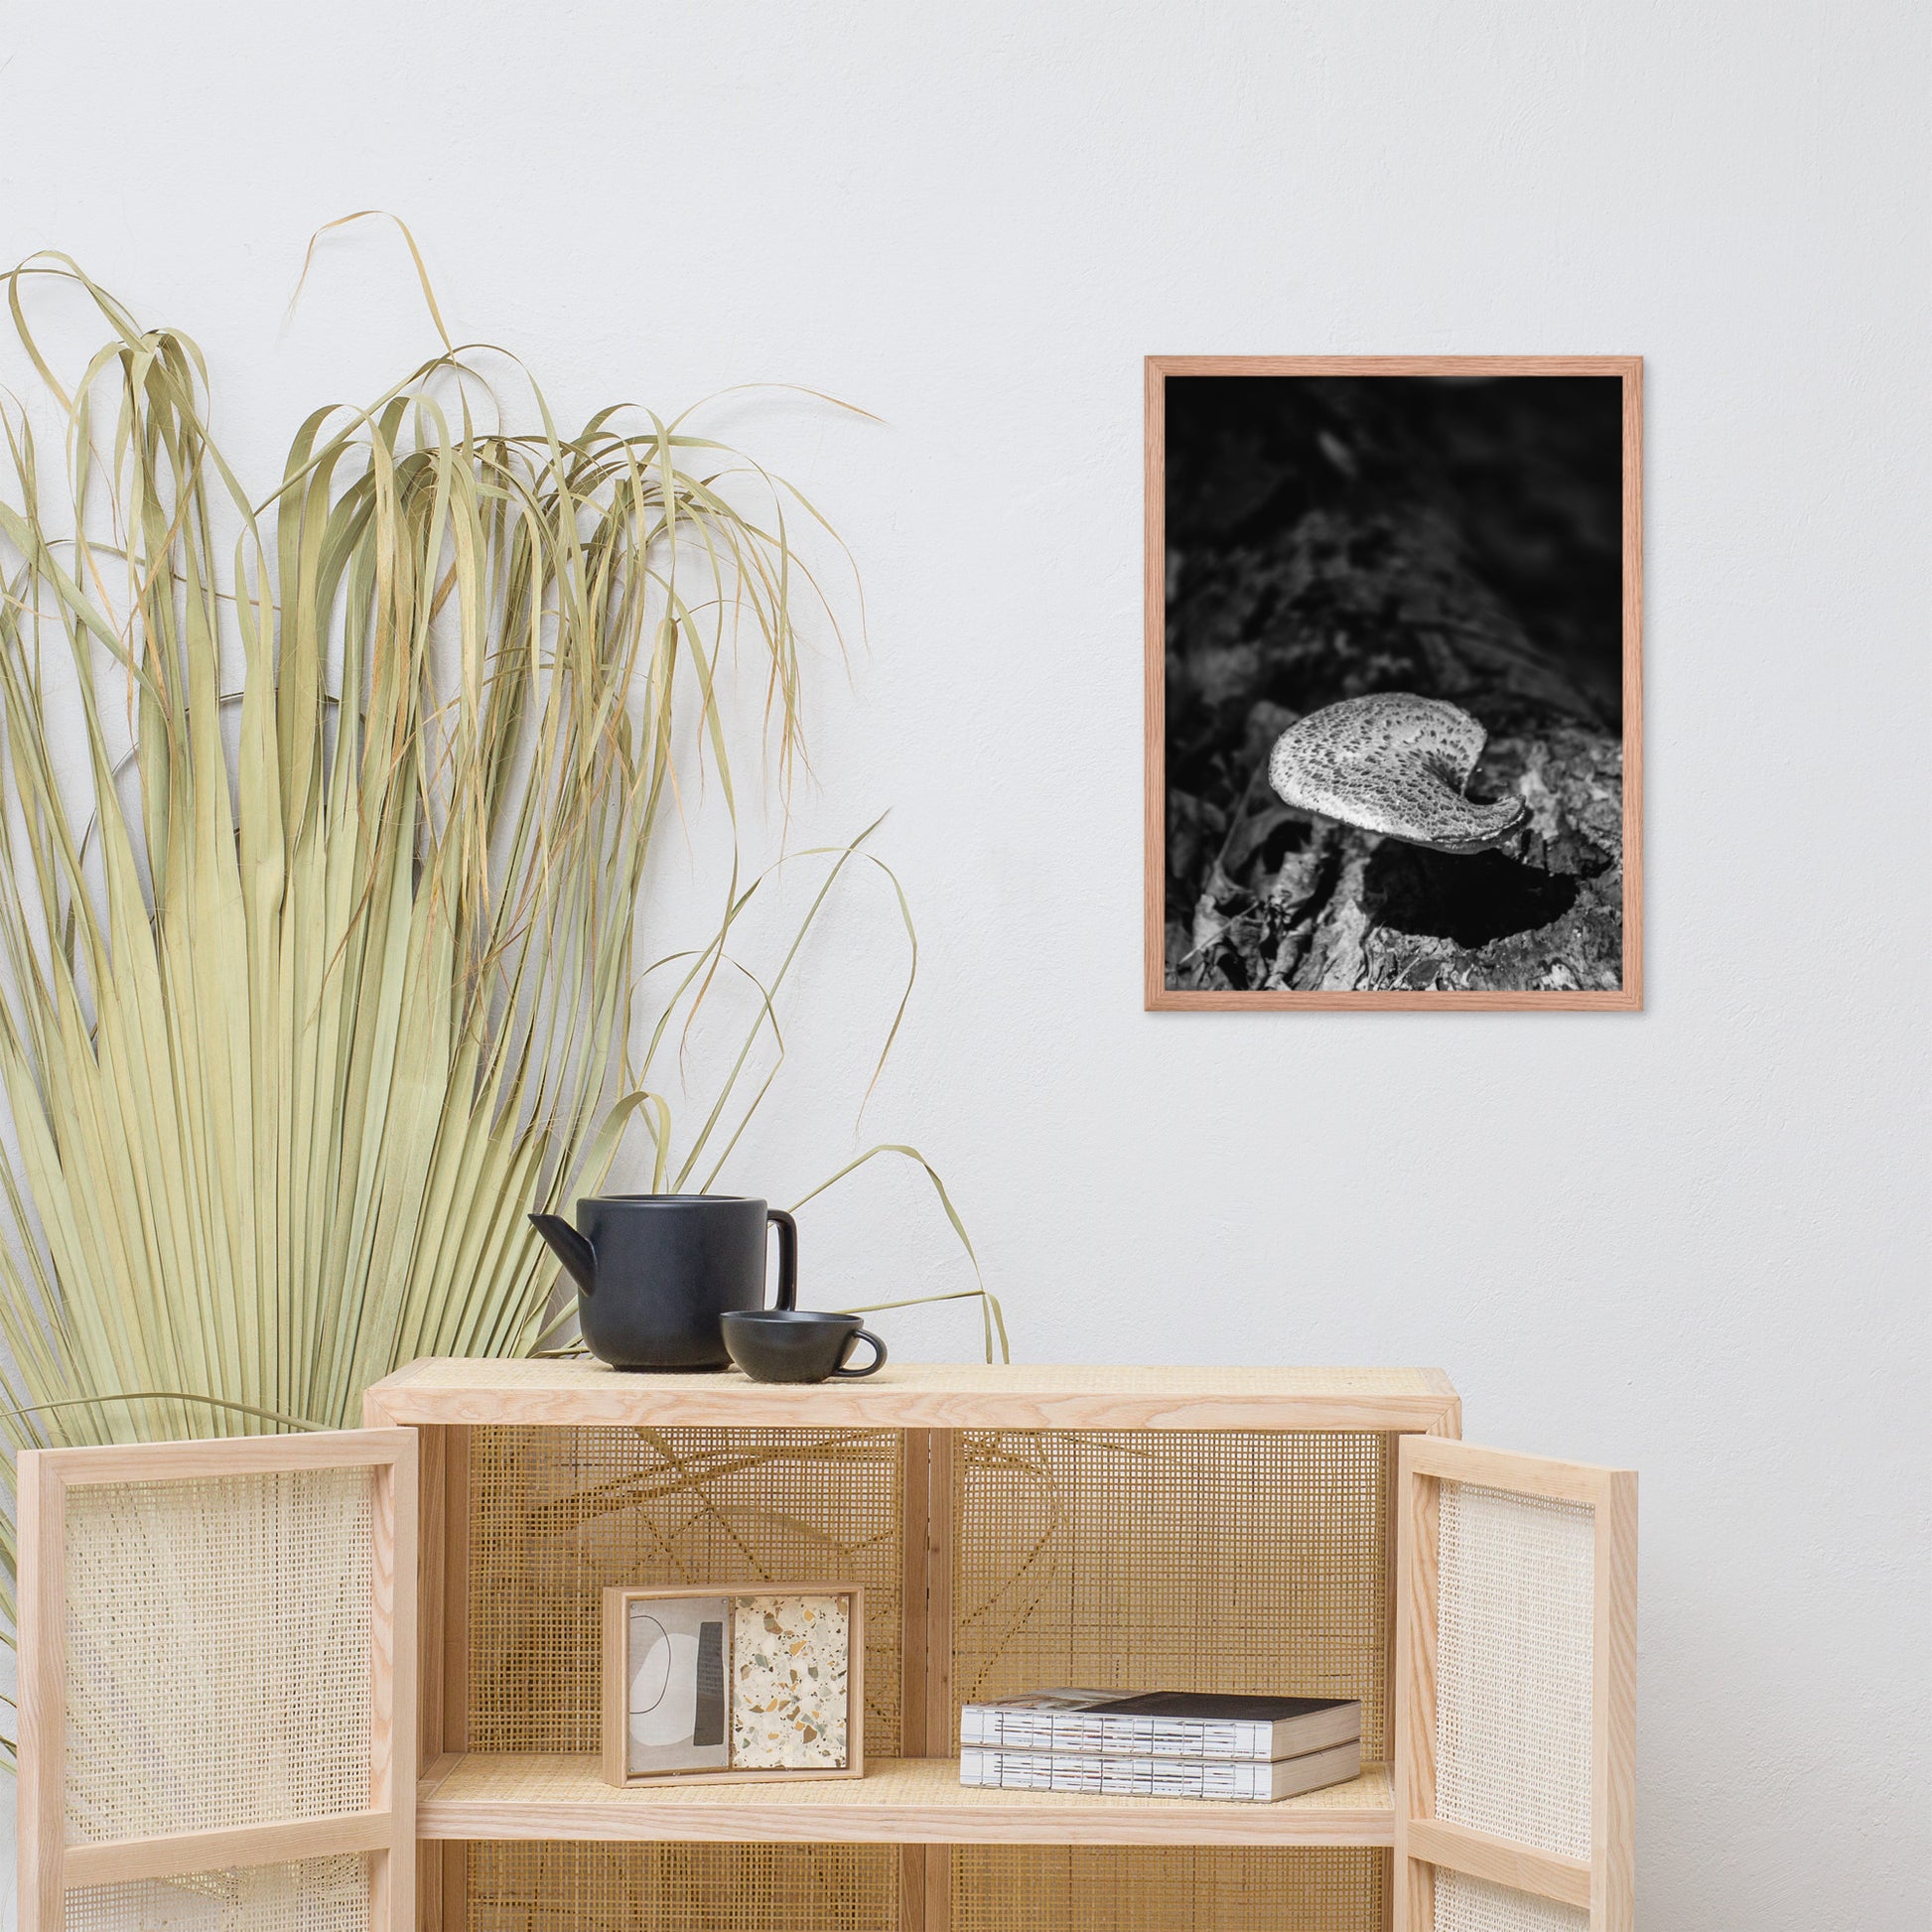 Botany Art Prints: Mushroom on Log in Black & White Rustic / Country Style Nature Photo Framed Wall Art Print